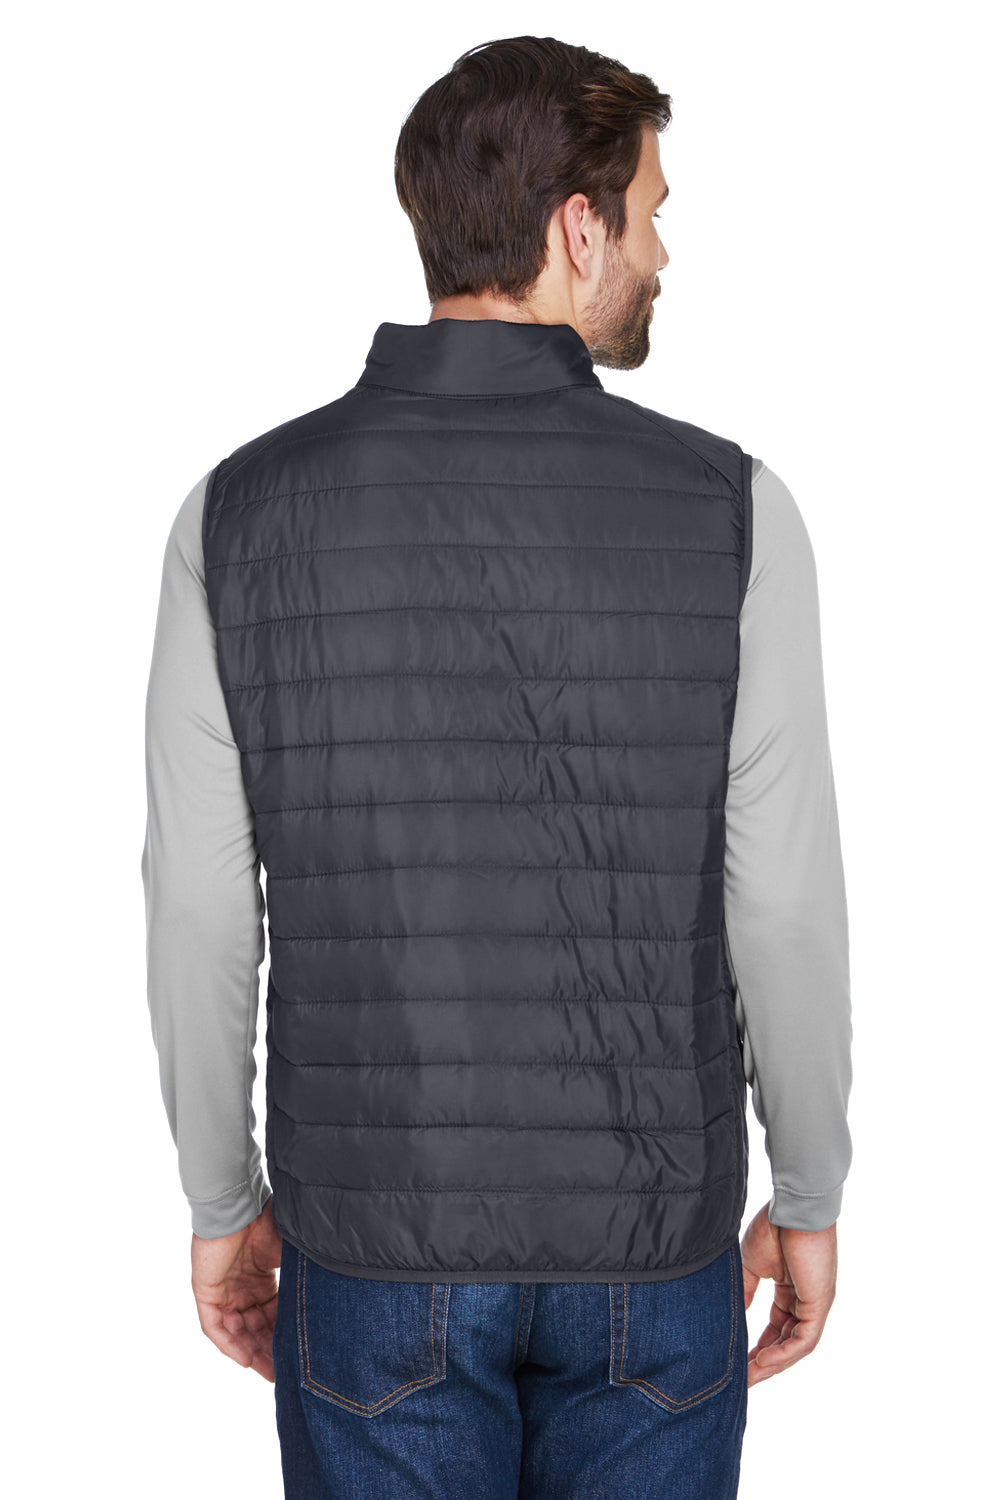 Core 365 CE702 Mens Prevail Packable Puffer Water Resistant Full Zip Vest Carbon Grey Back